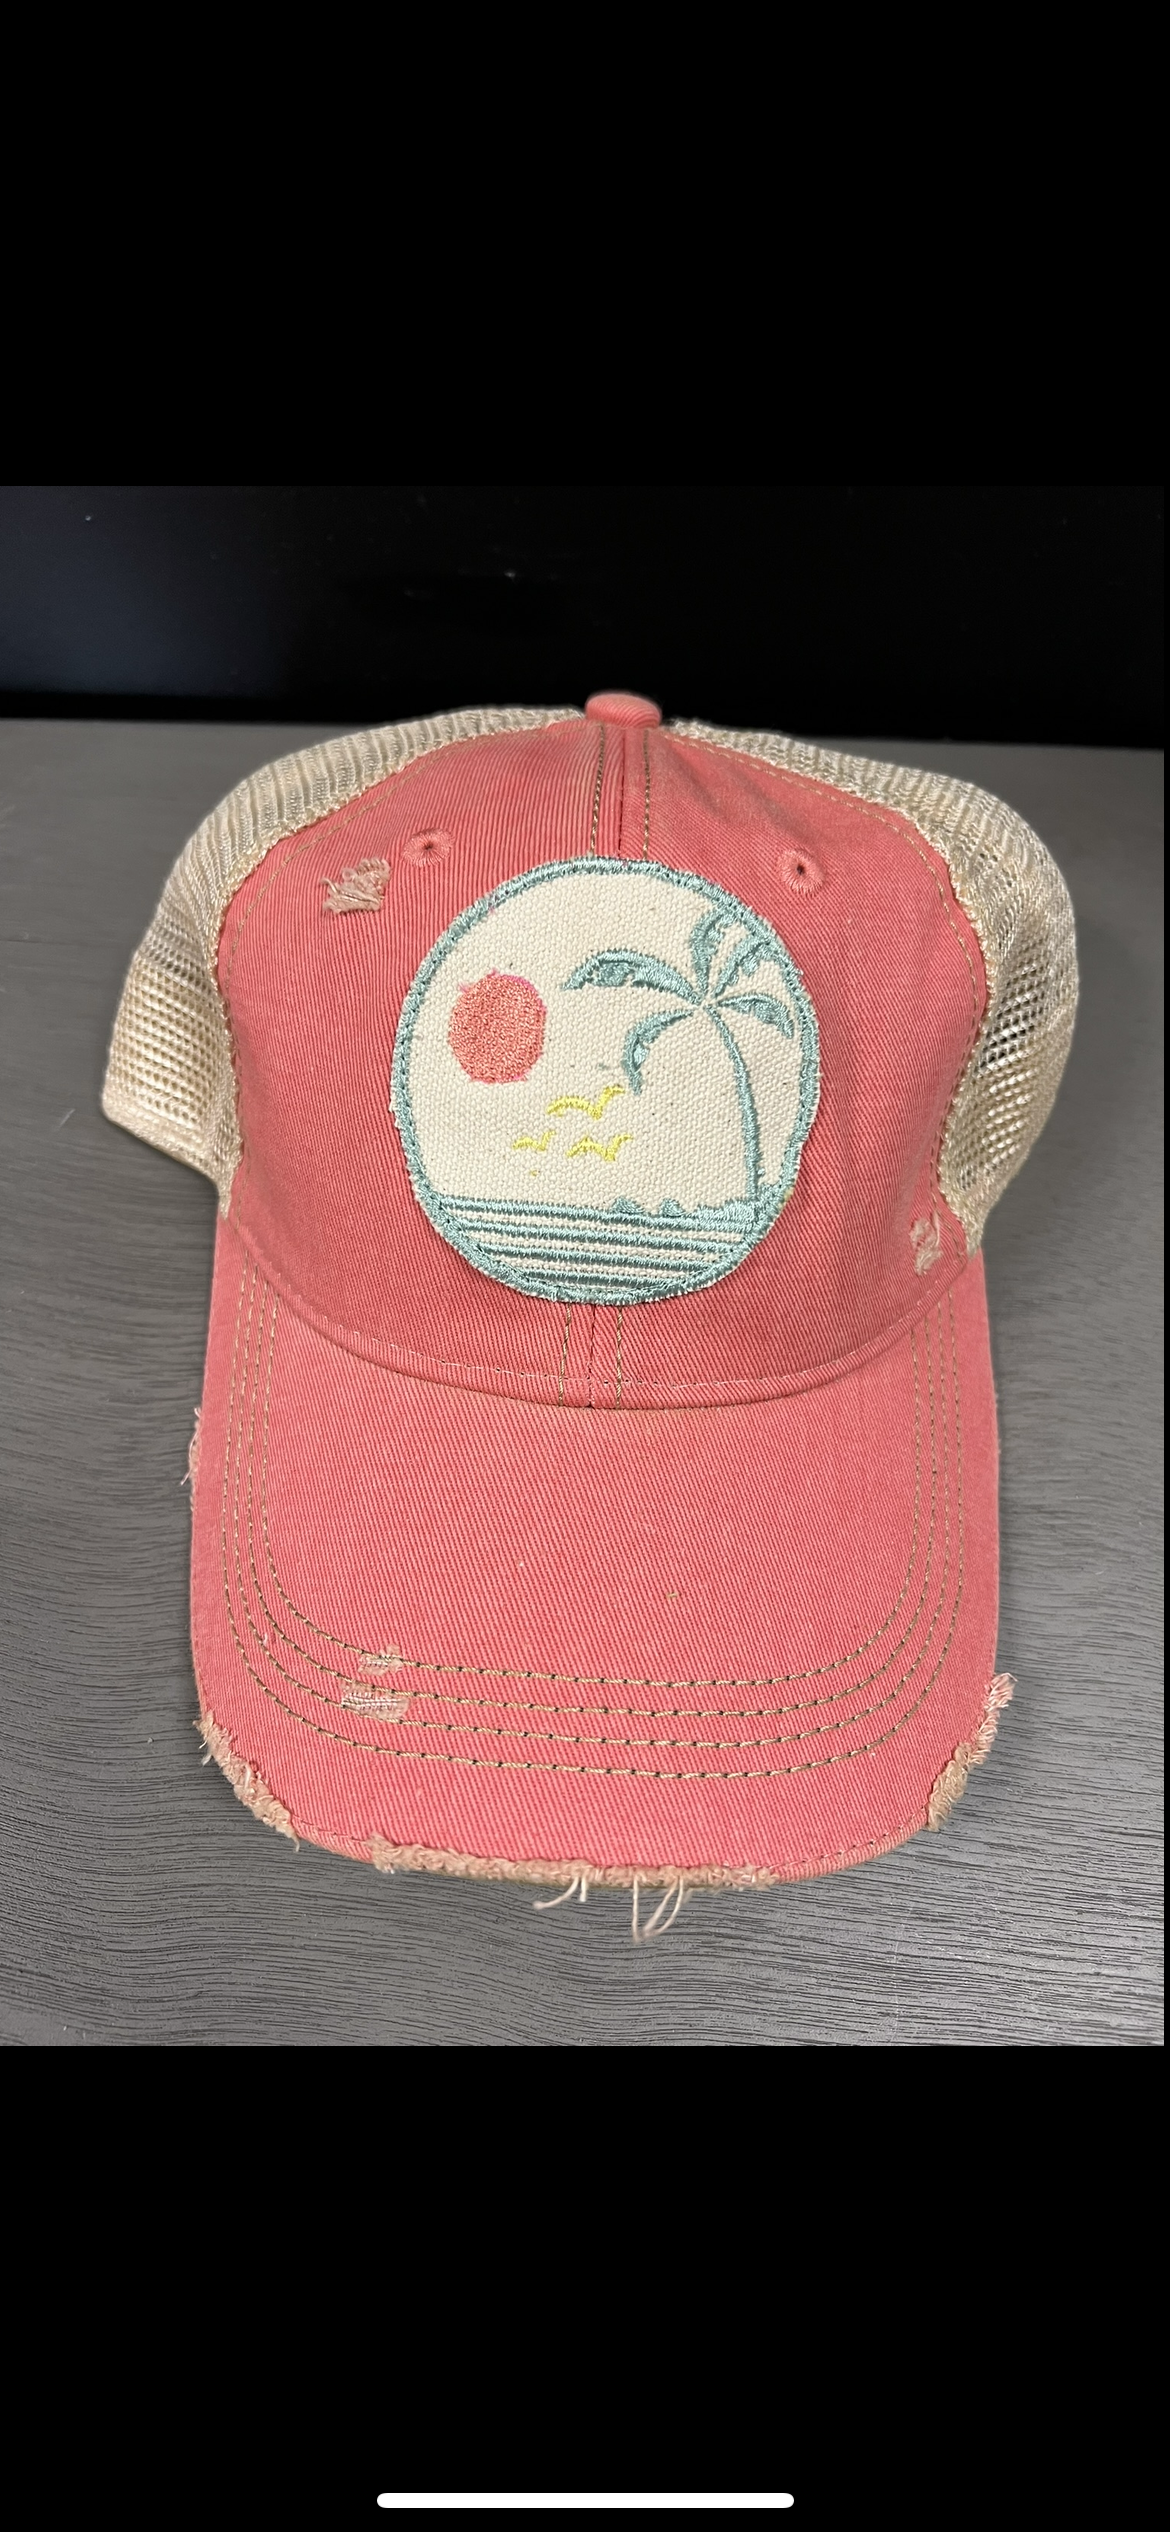 Distressed Baseball Hats